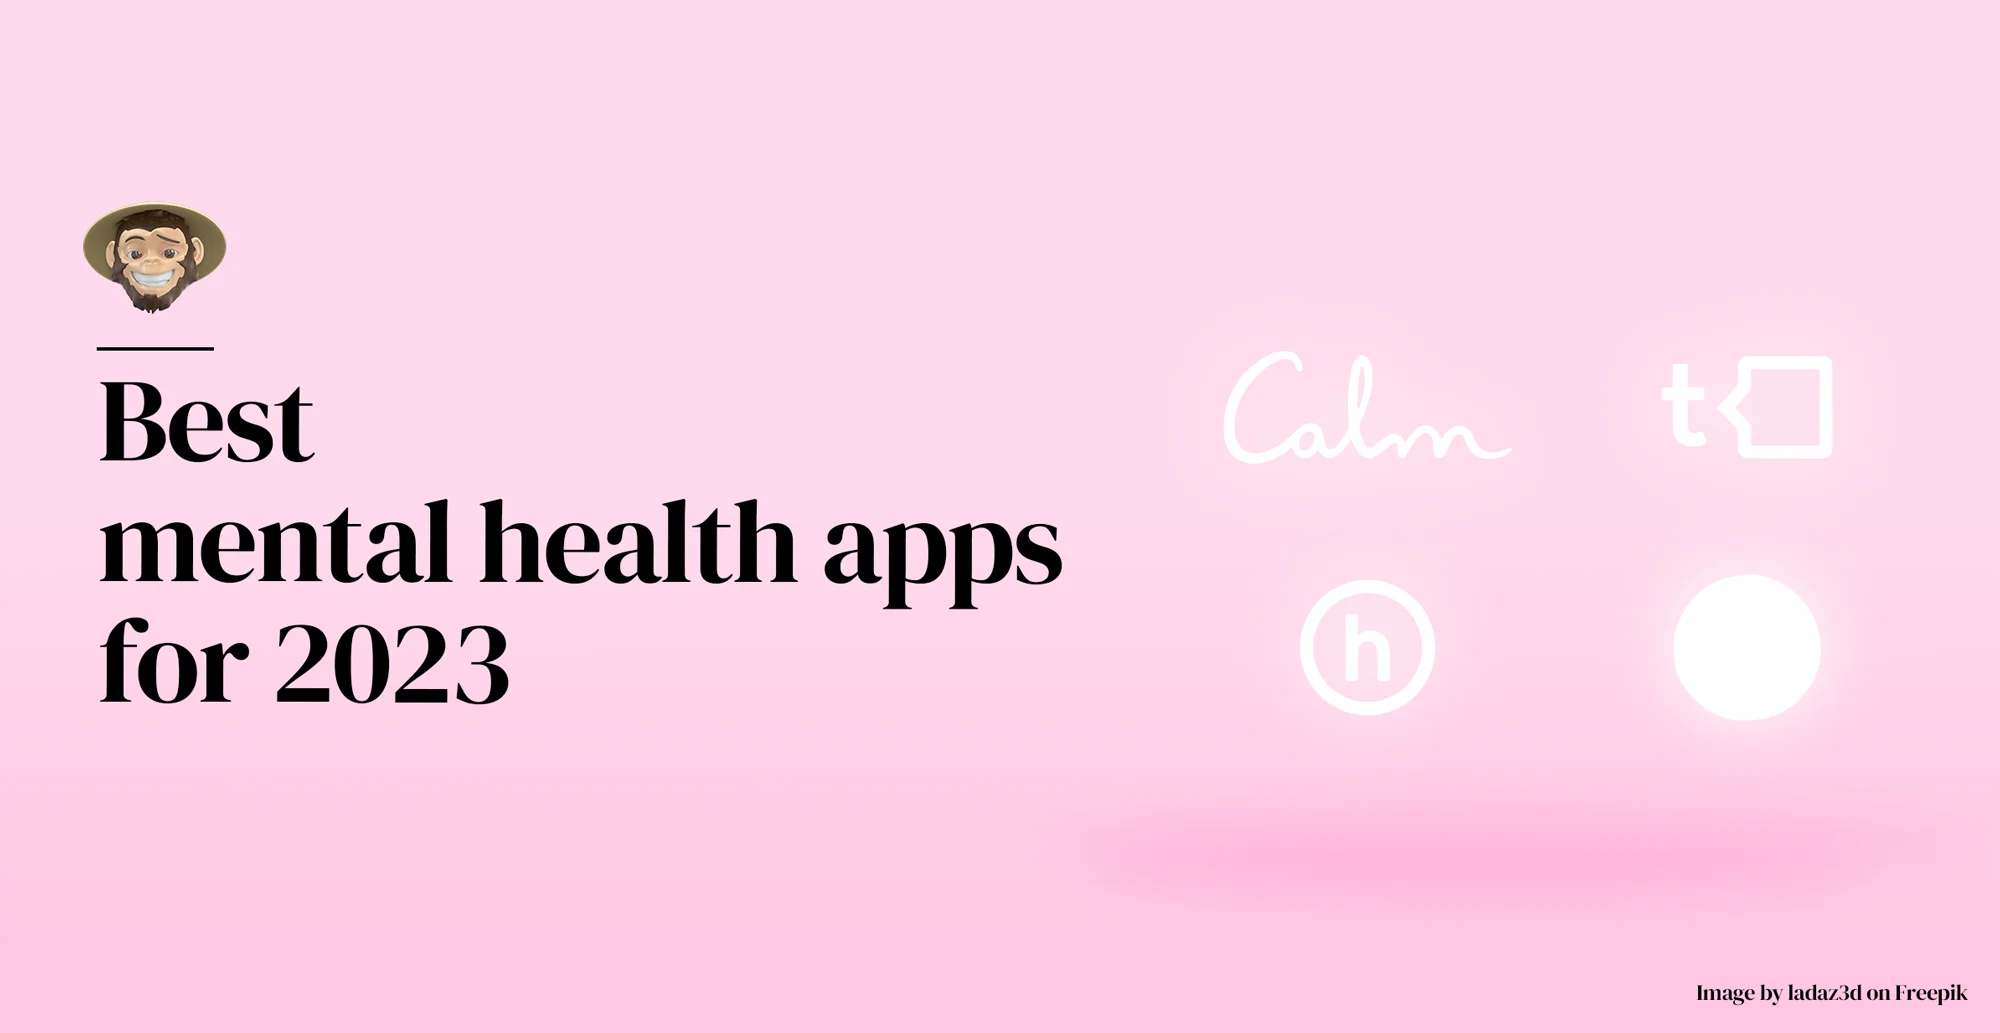 Best mental health apps for 2023